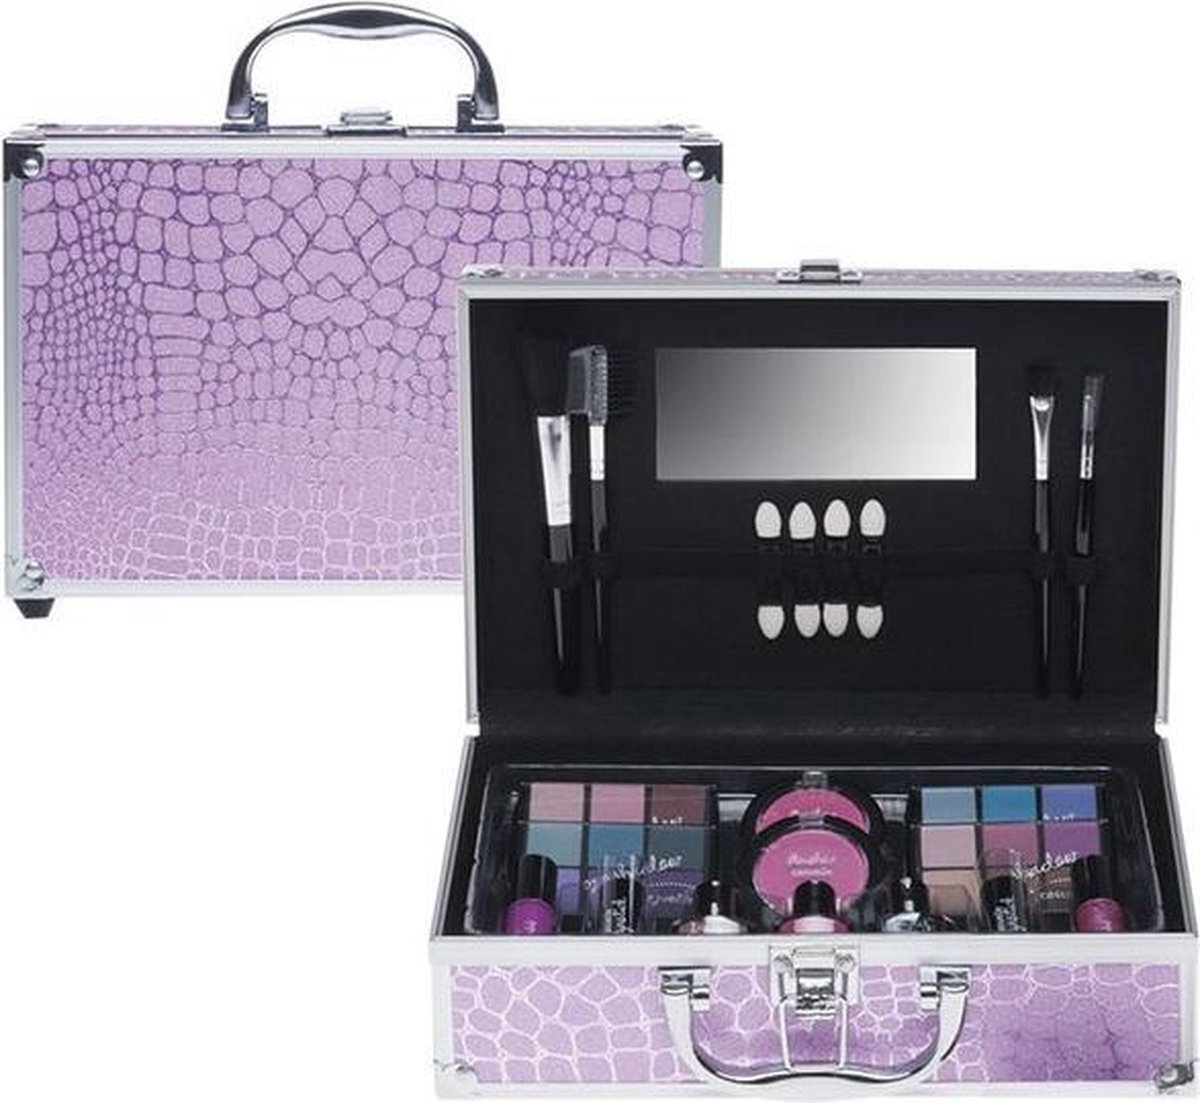 Braet Make-up koffer voor kinderen - casuelle cosmetica koffer - 41 delig met spiegel - roze - motief krokodil